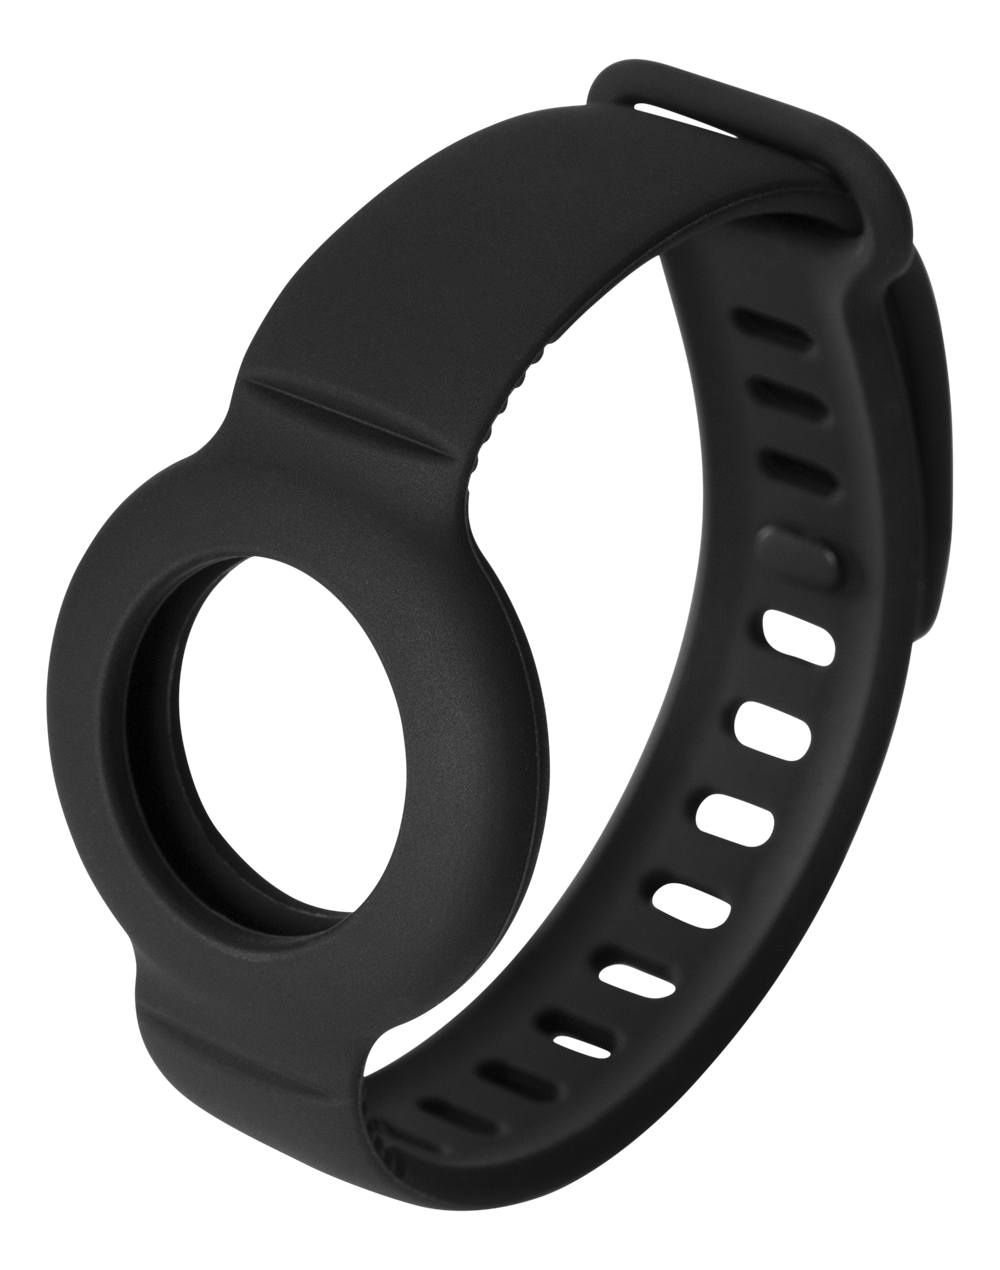 Silicone bracelet for Apple AirTag DELTACO adjustable size, black / MCASE-TAG16